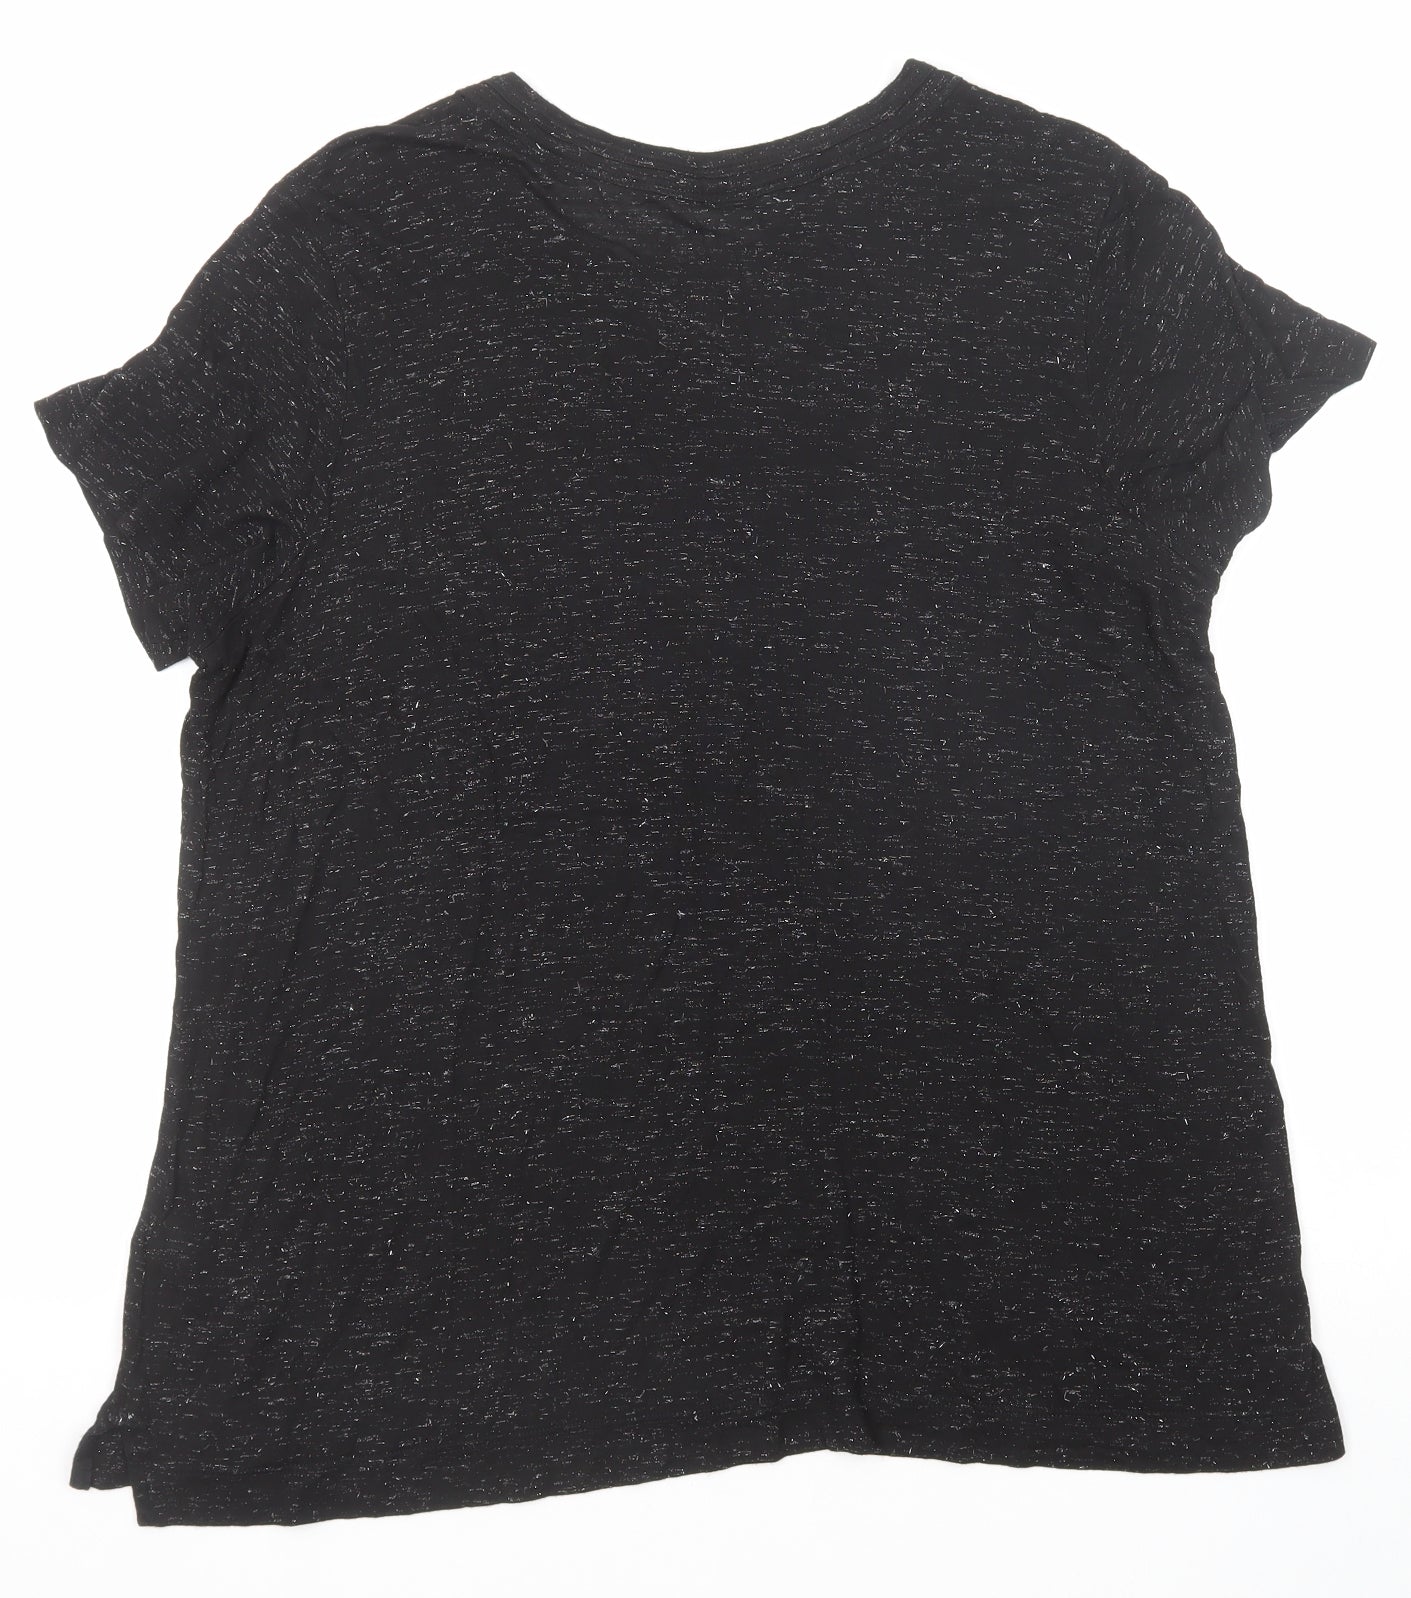 NEXT Womens Black Viscose Basic T-Shirt Size 22 Boat Neck - Marl